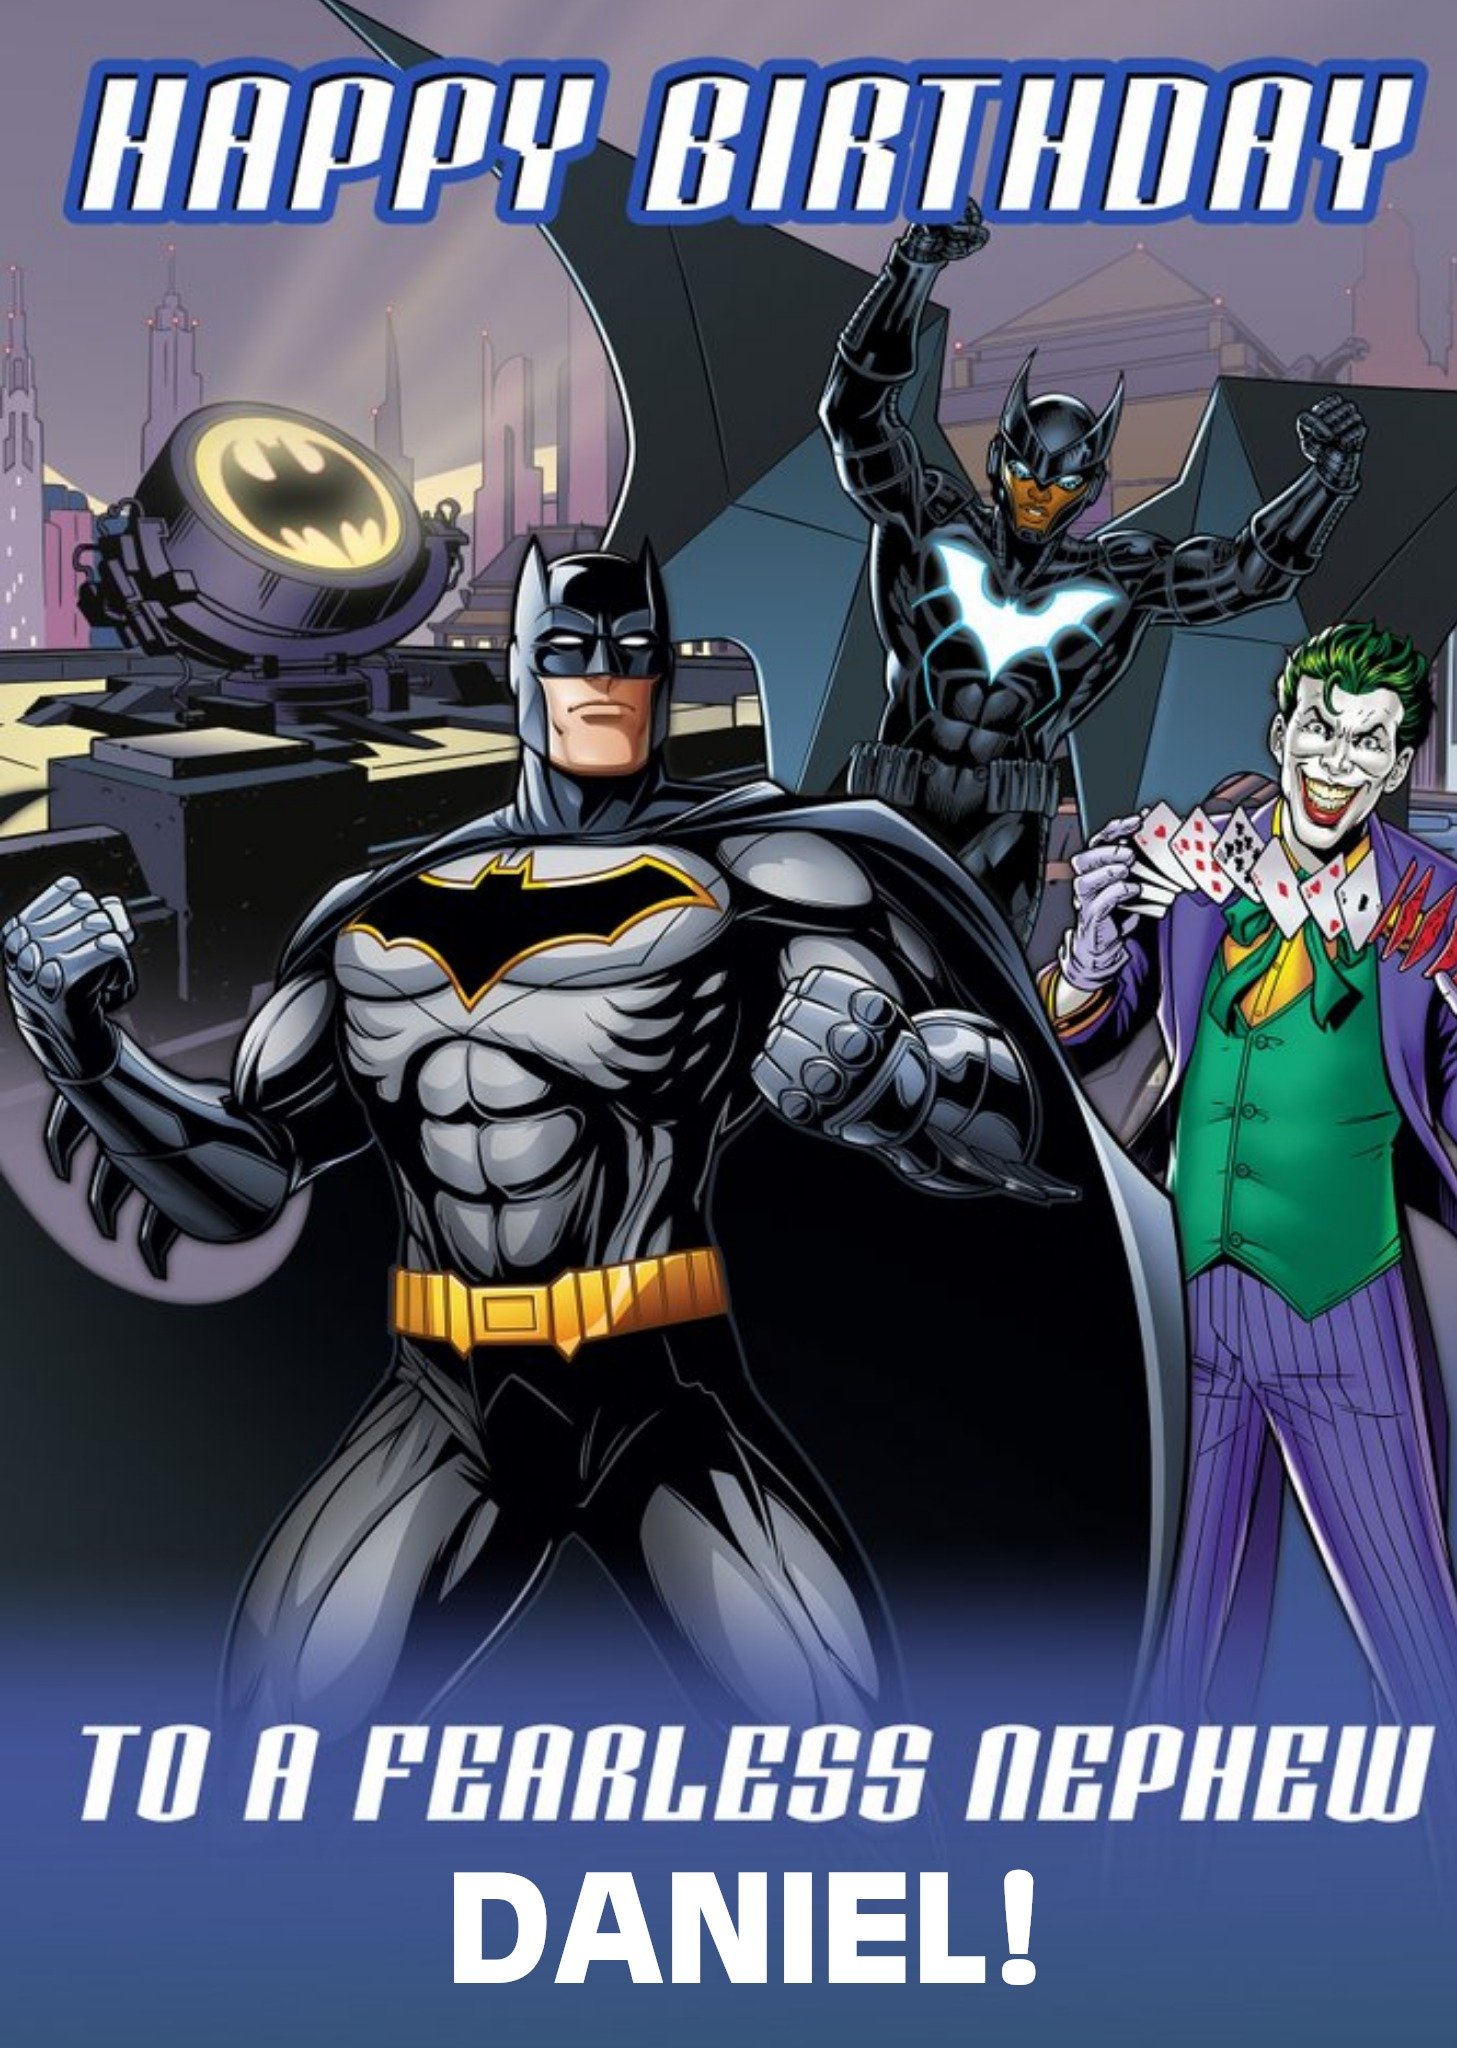 Illustrated Fearless Nephew Batman Birthday Card, Large